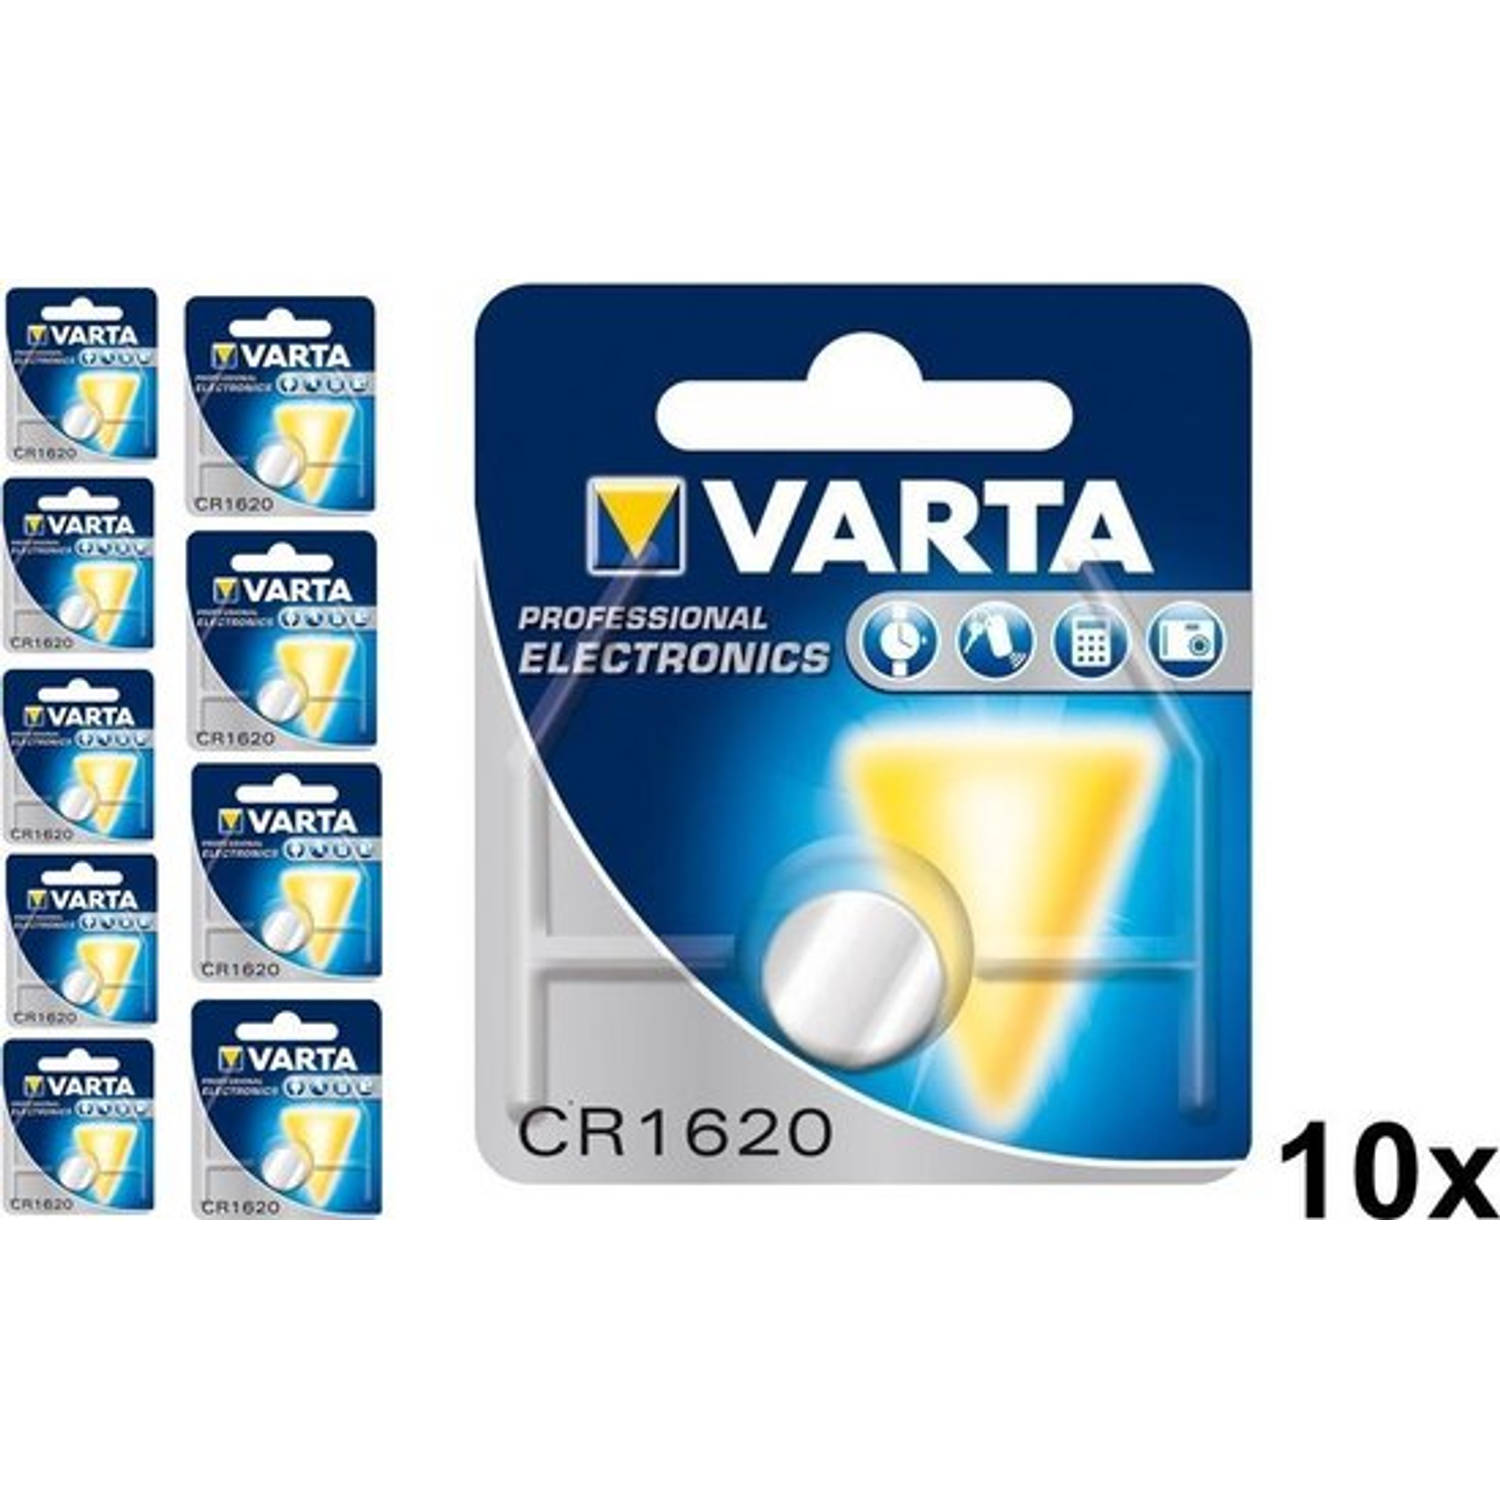 Varta Professional Electronics CR1620 6620 70mAh 3V knoopcelbatterij - 10 stuks